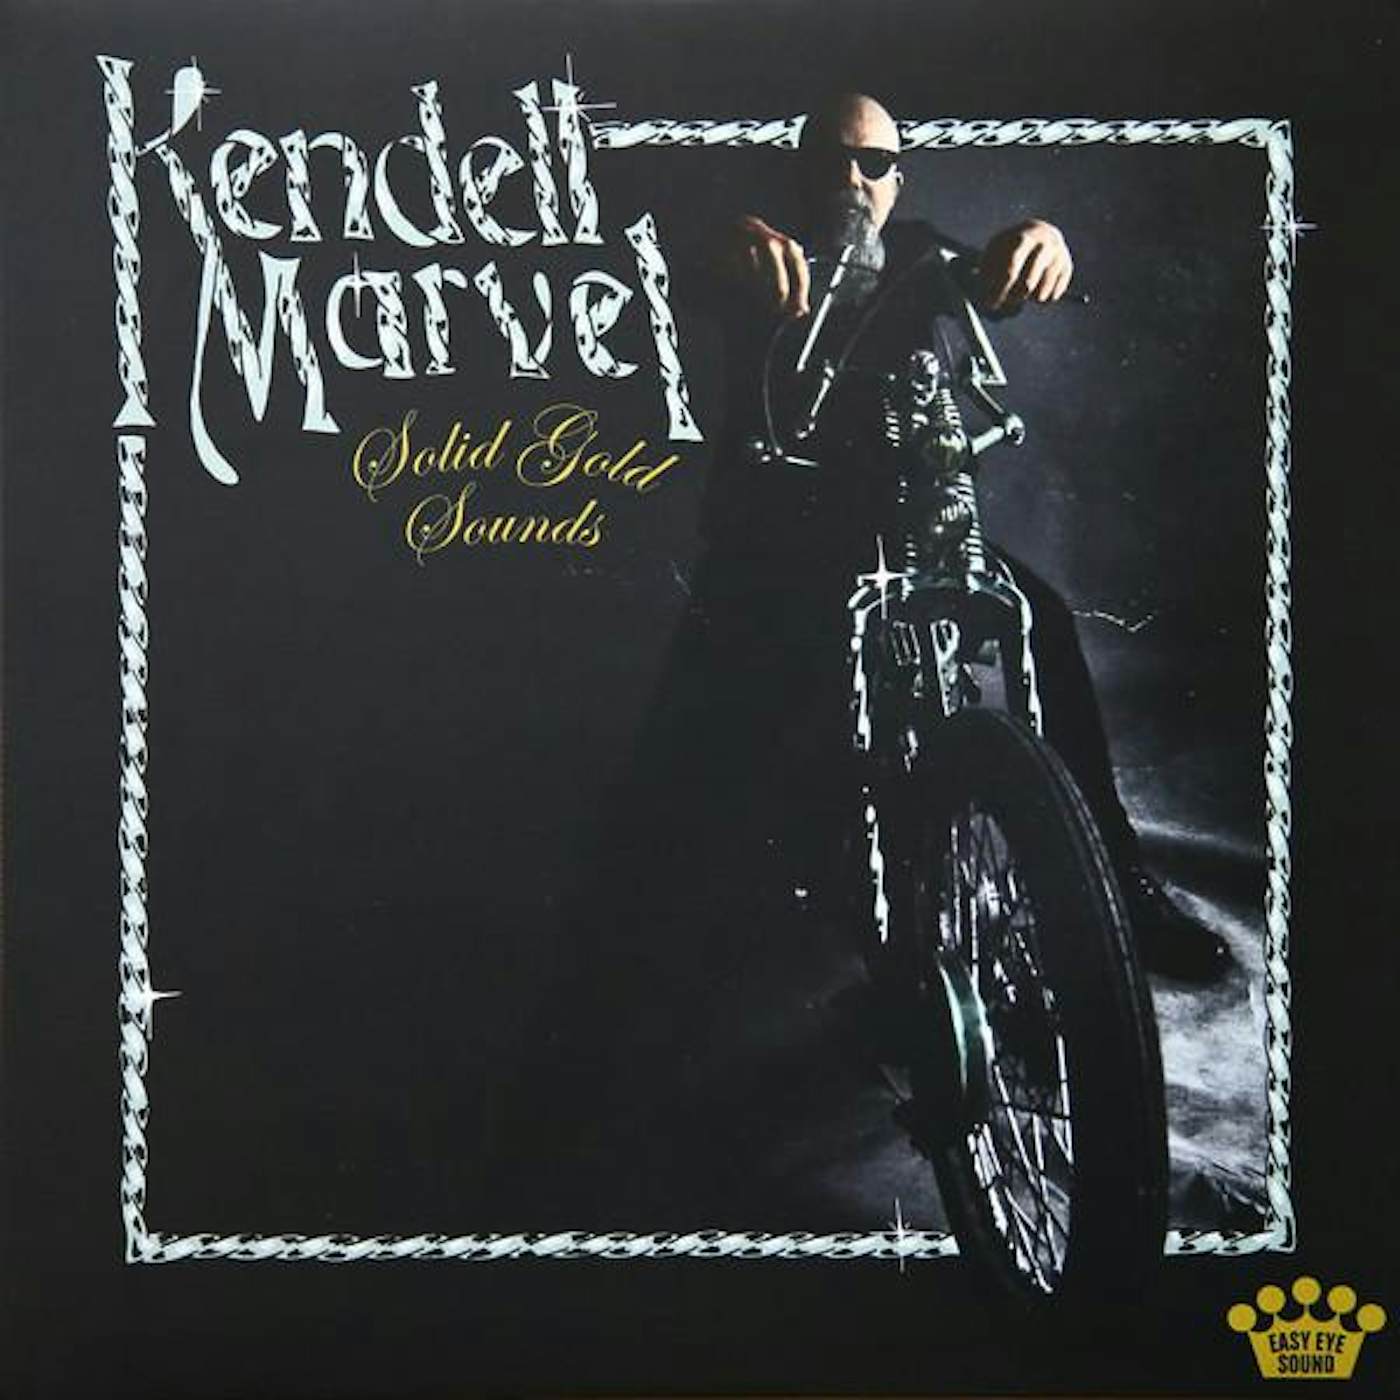 Kendell Marvel SOLID GOLD SOUNDS Vinyl Record